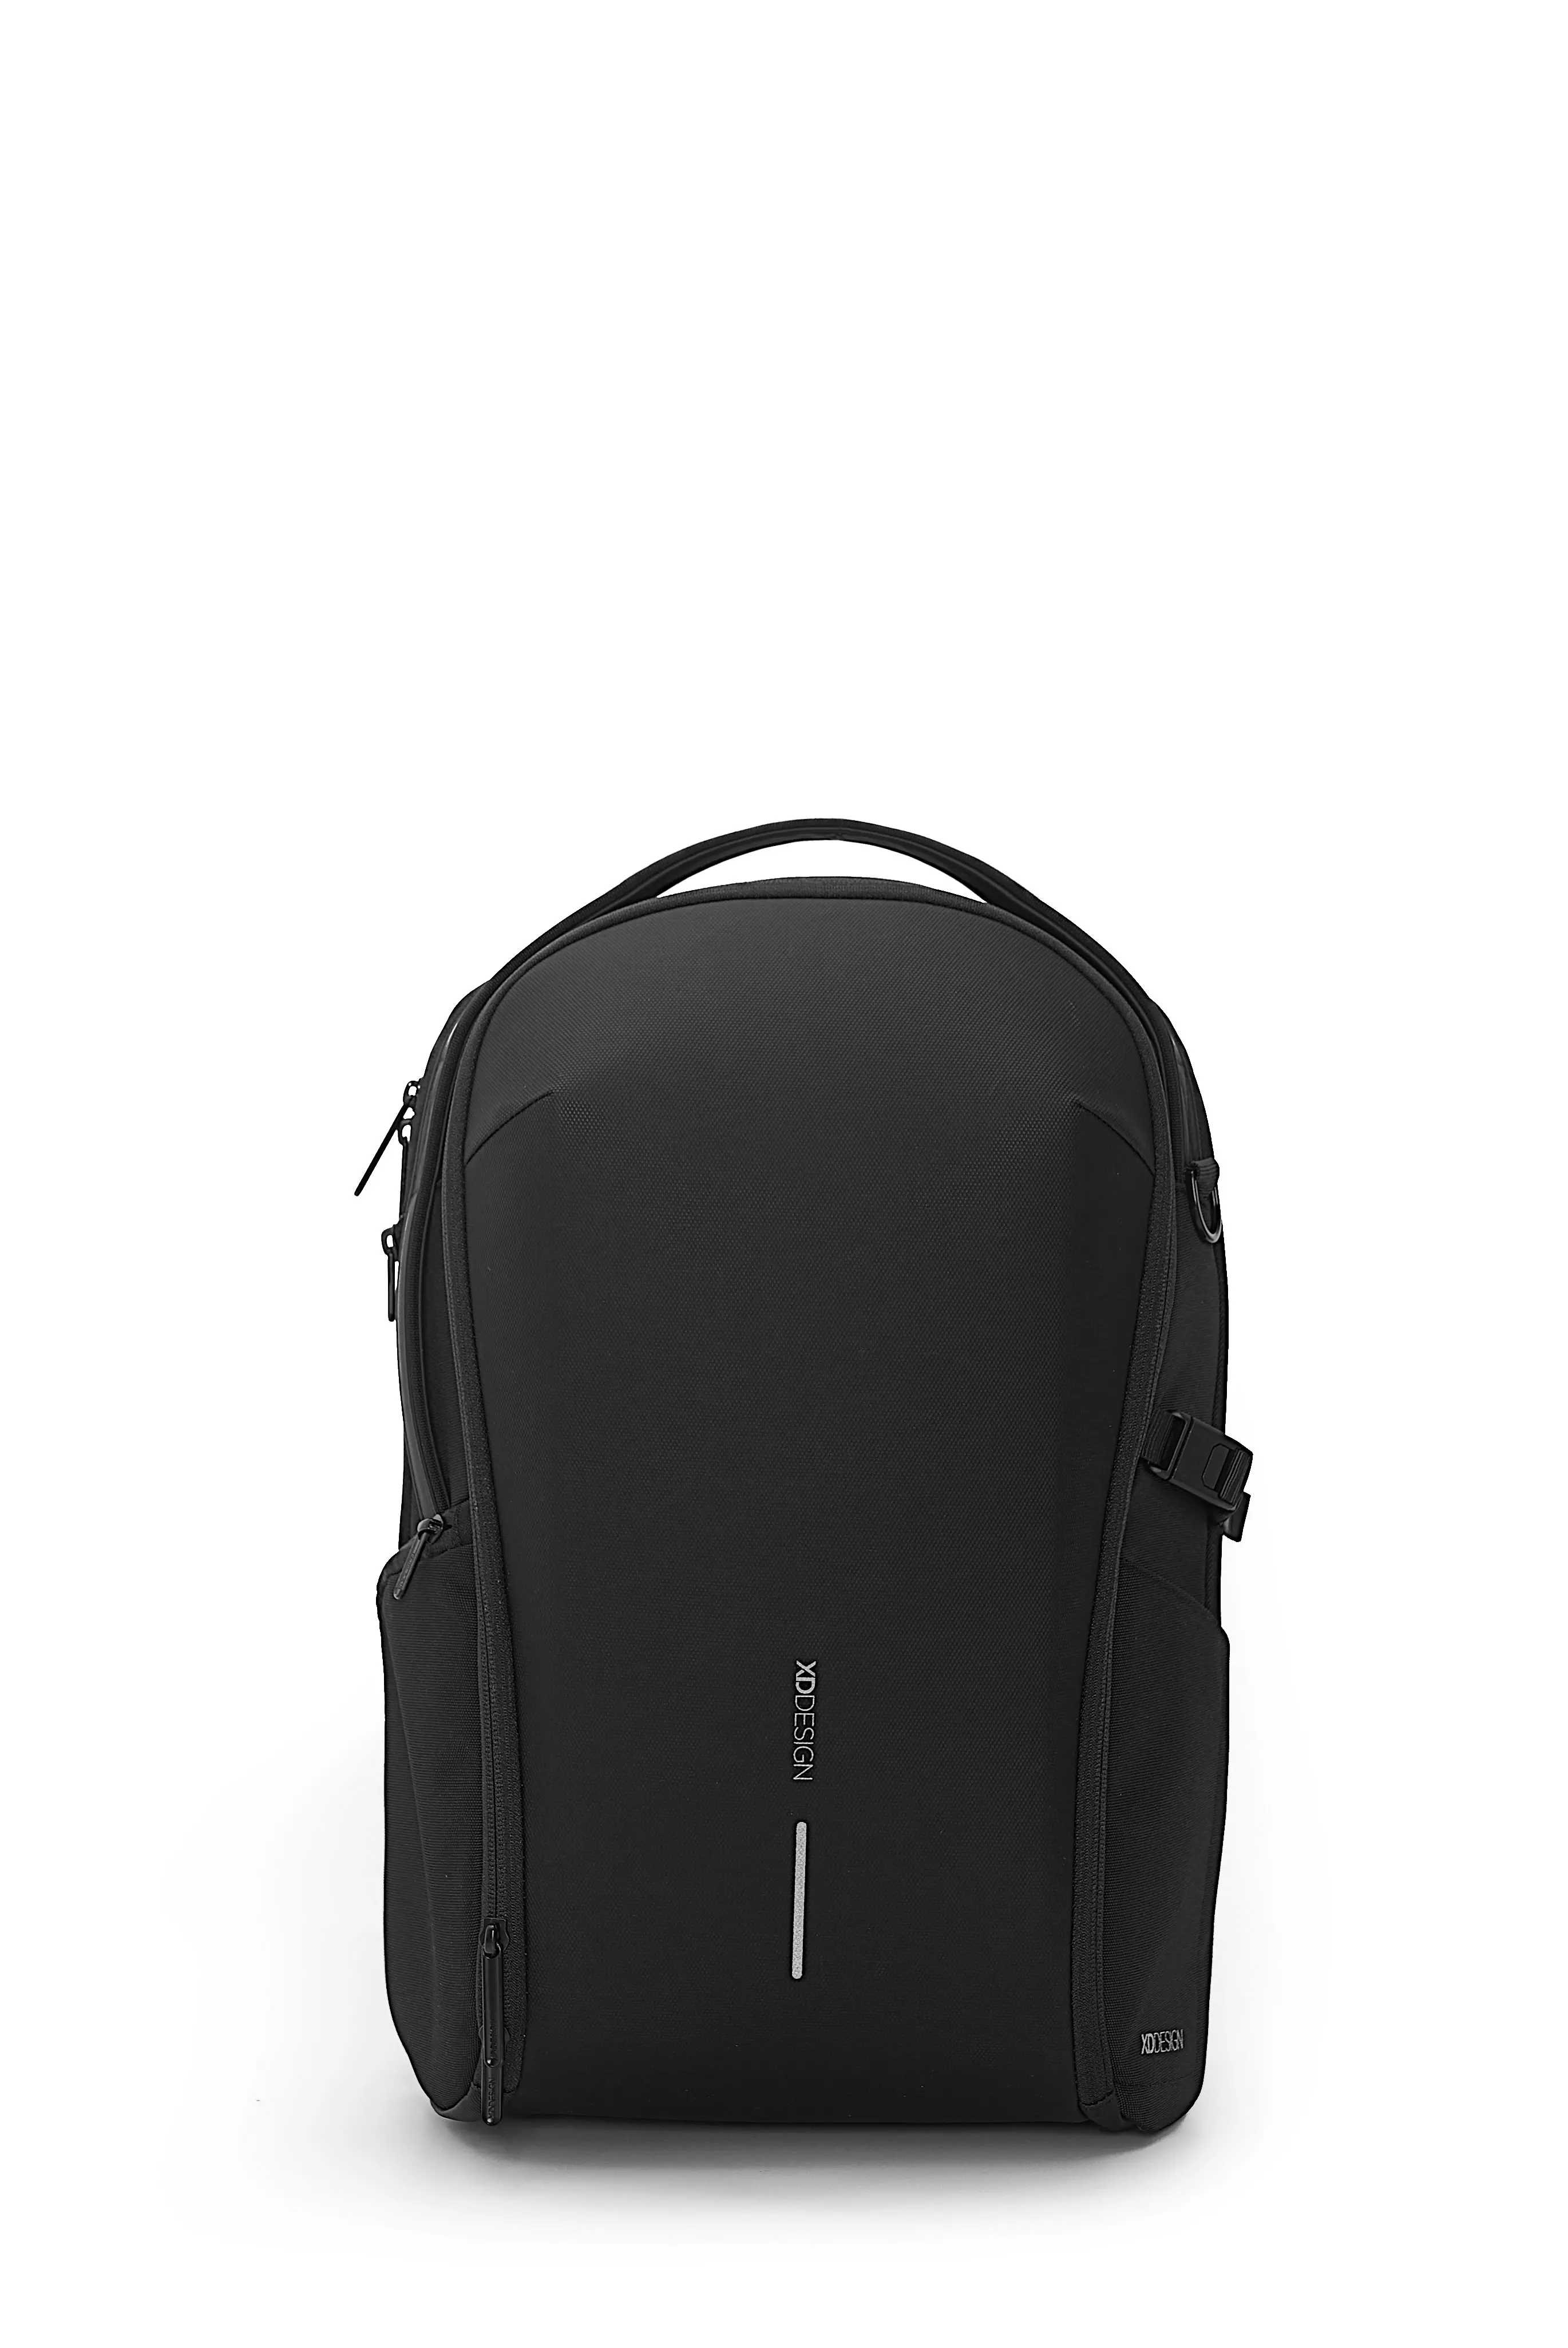 Xd Design Bobby Bizz Backpack Black